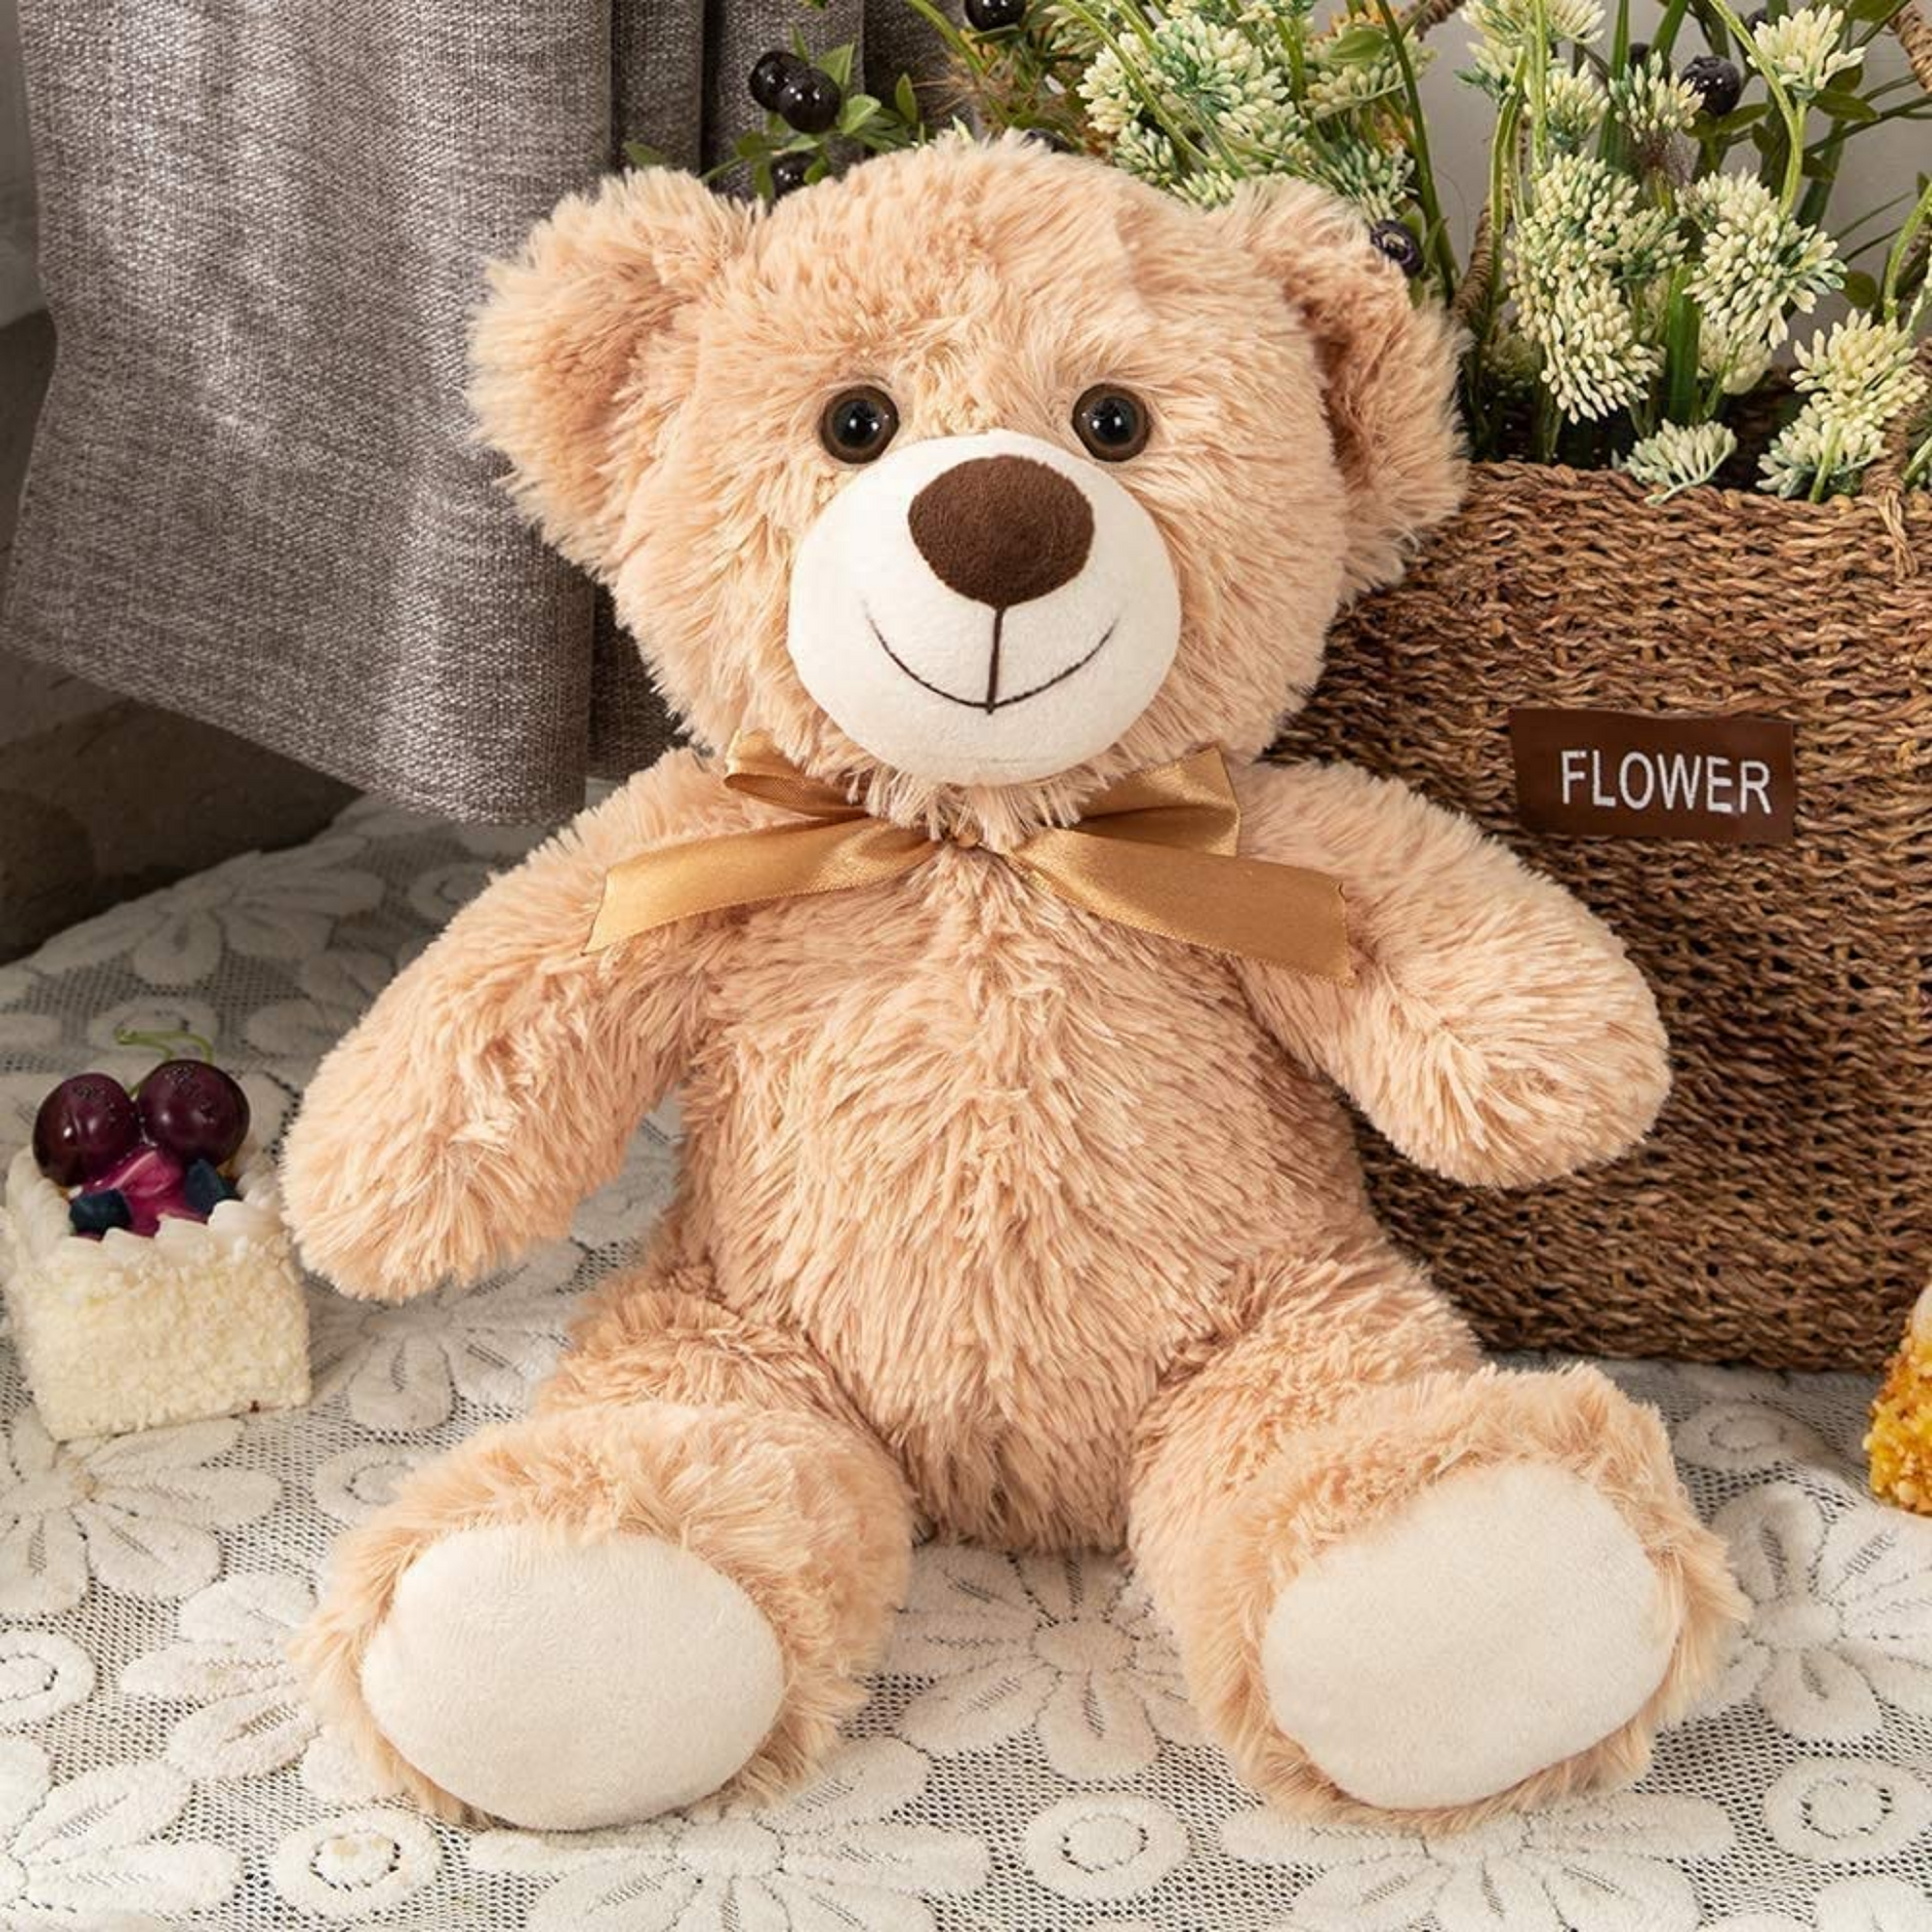 Teddy Bears Stuffed animals